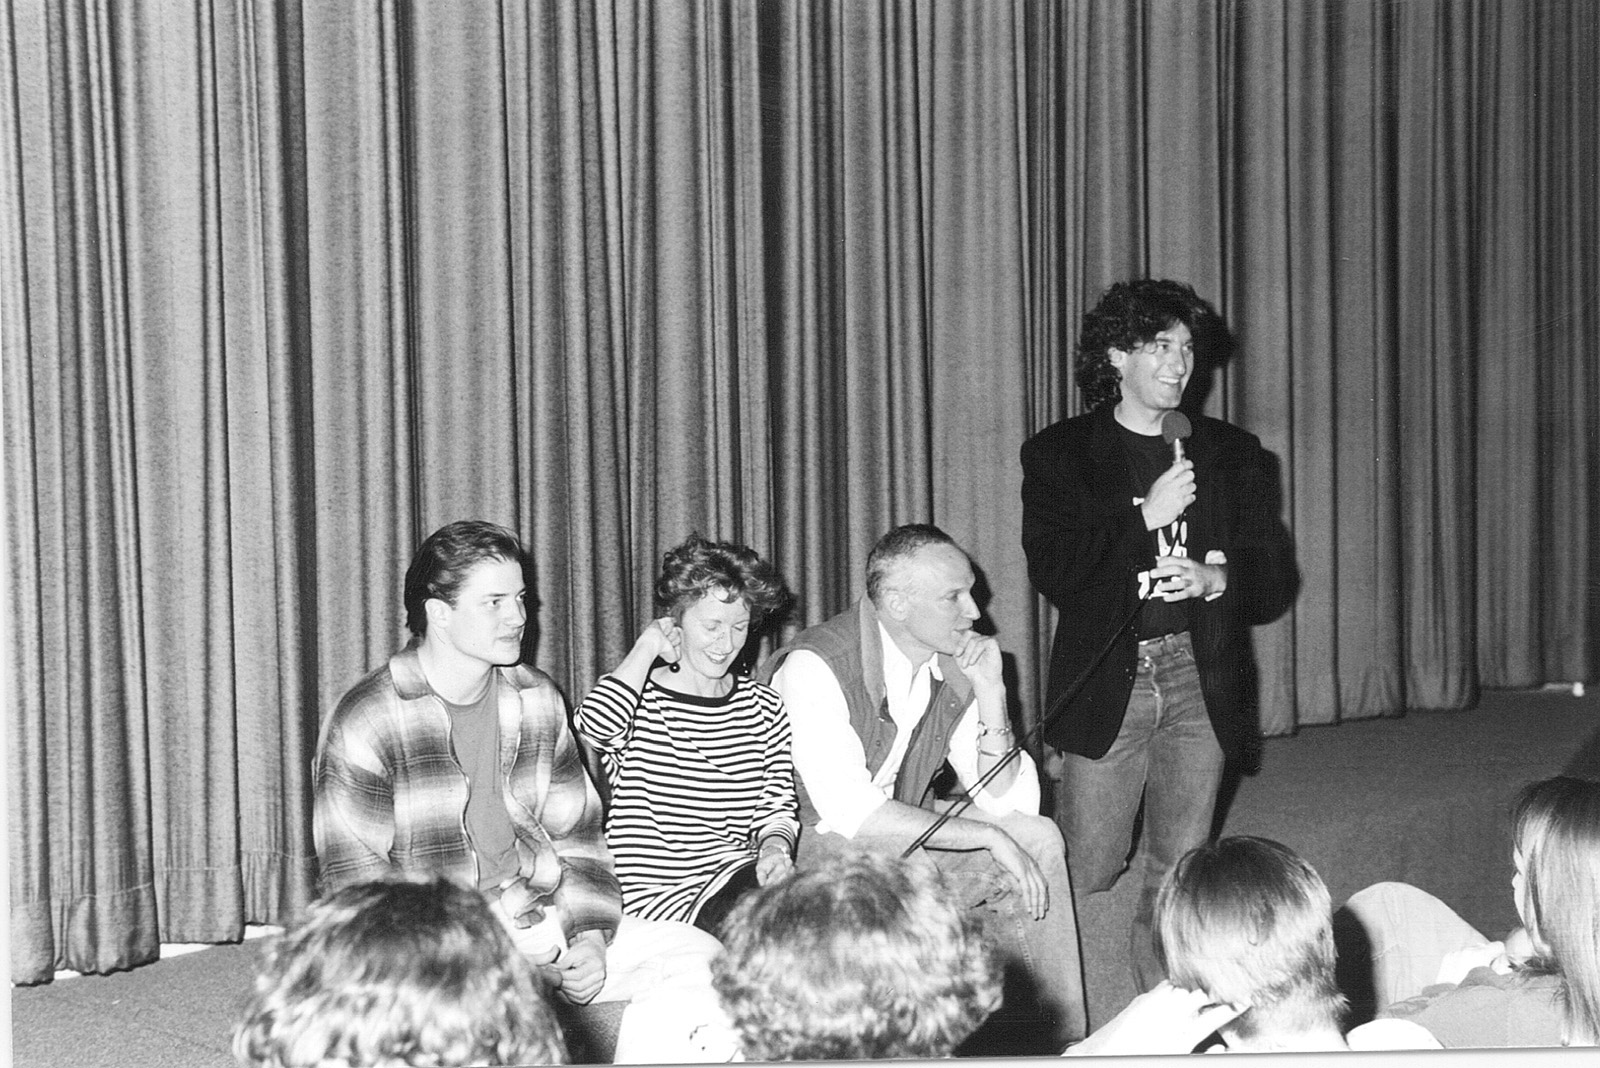 The cast and crew of the film, Twenty Bucks, including director, Keva Rosenfeld (far right) and actor, Brendan Fraser (far left)